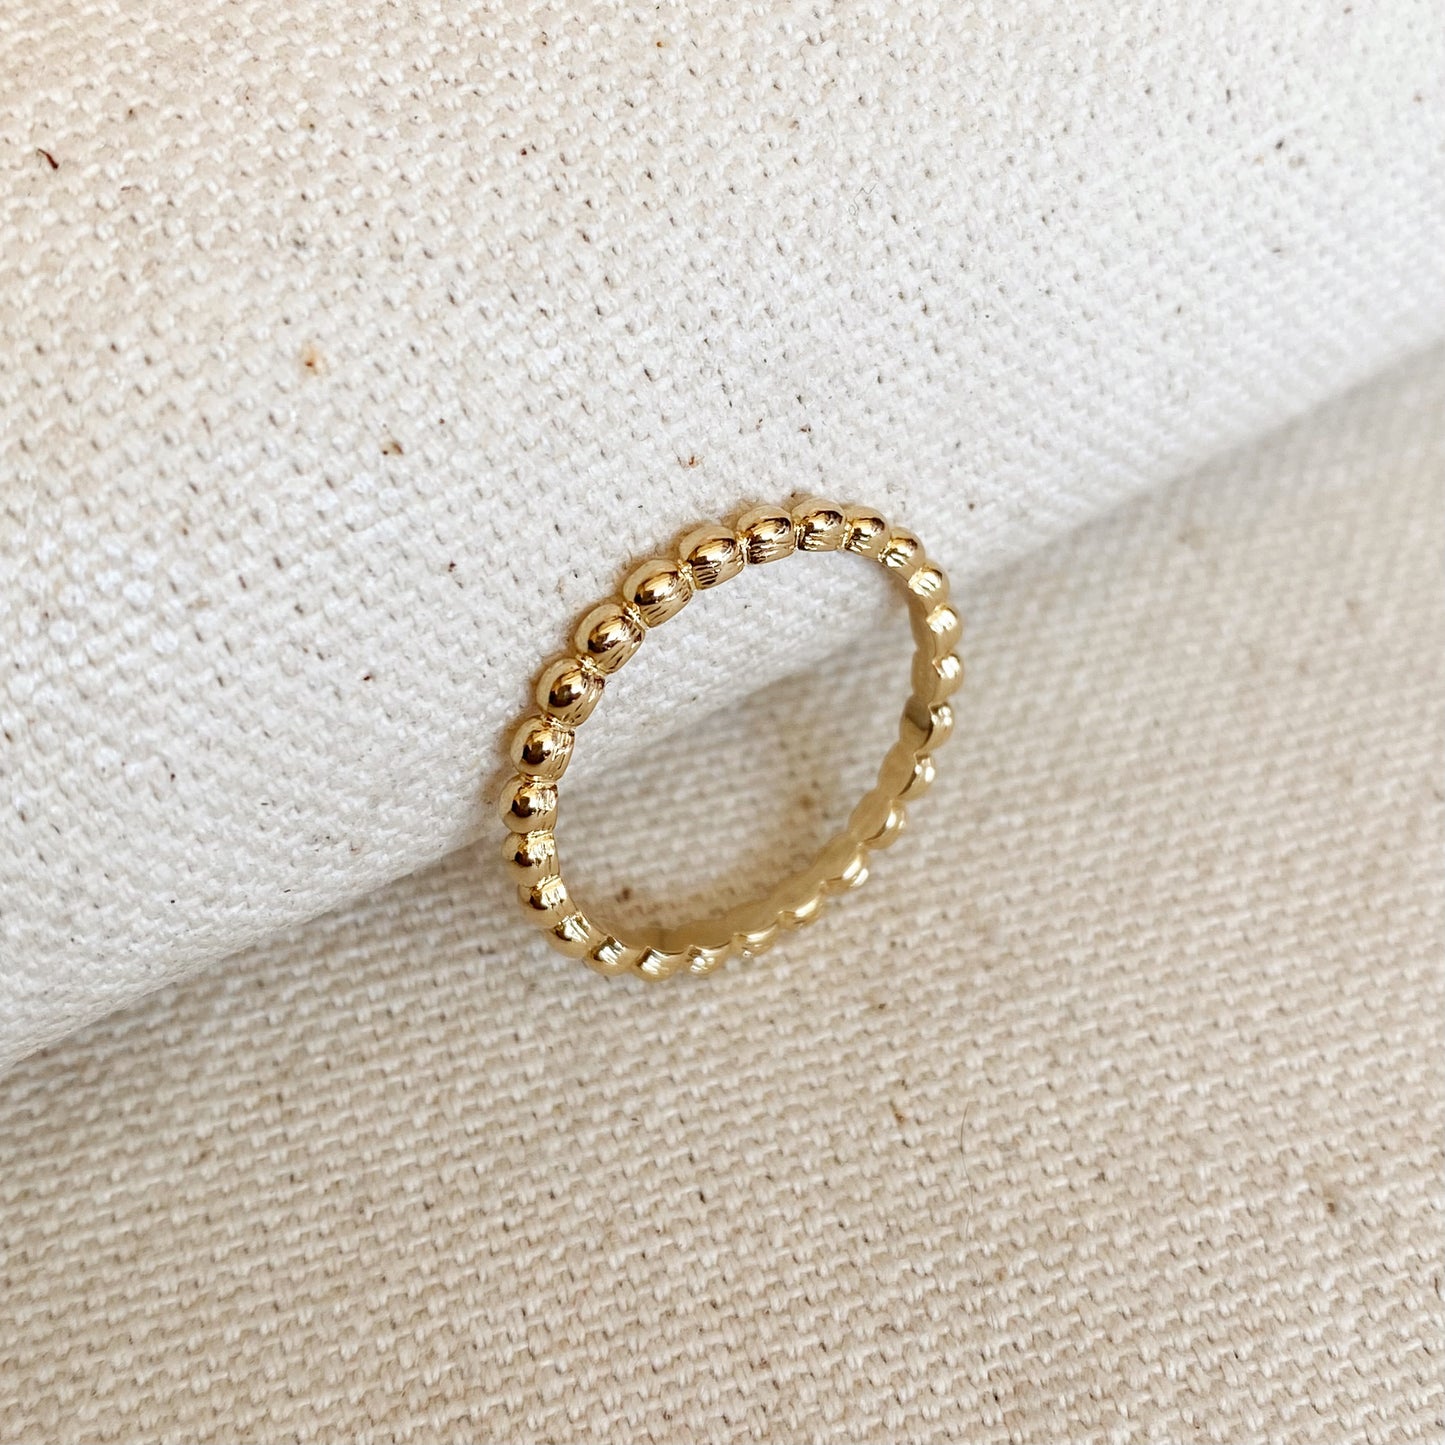 GoldFi 18k Gold Filled Beaded Band Ring